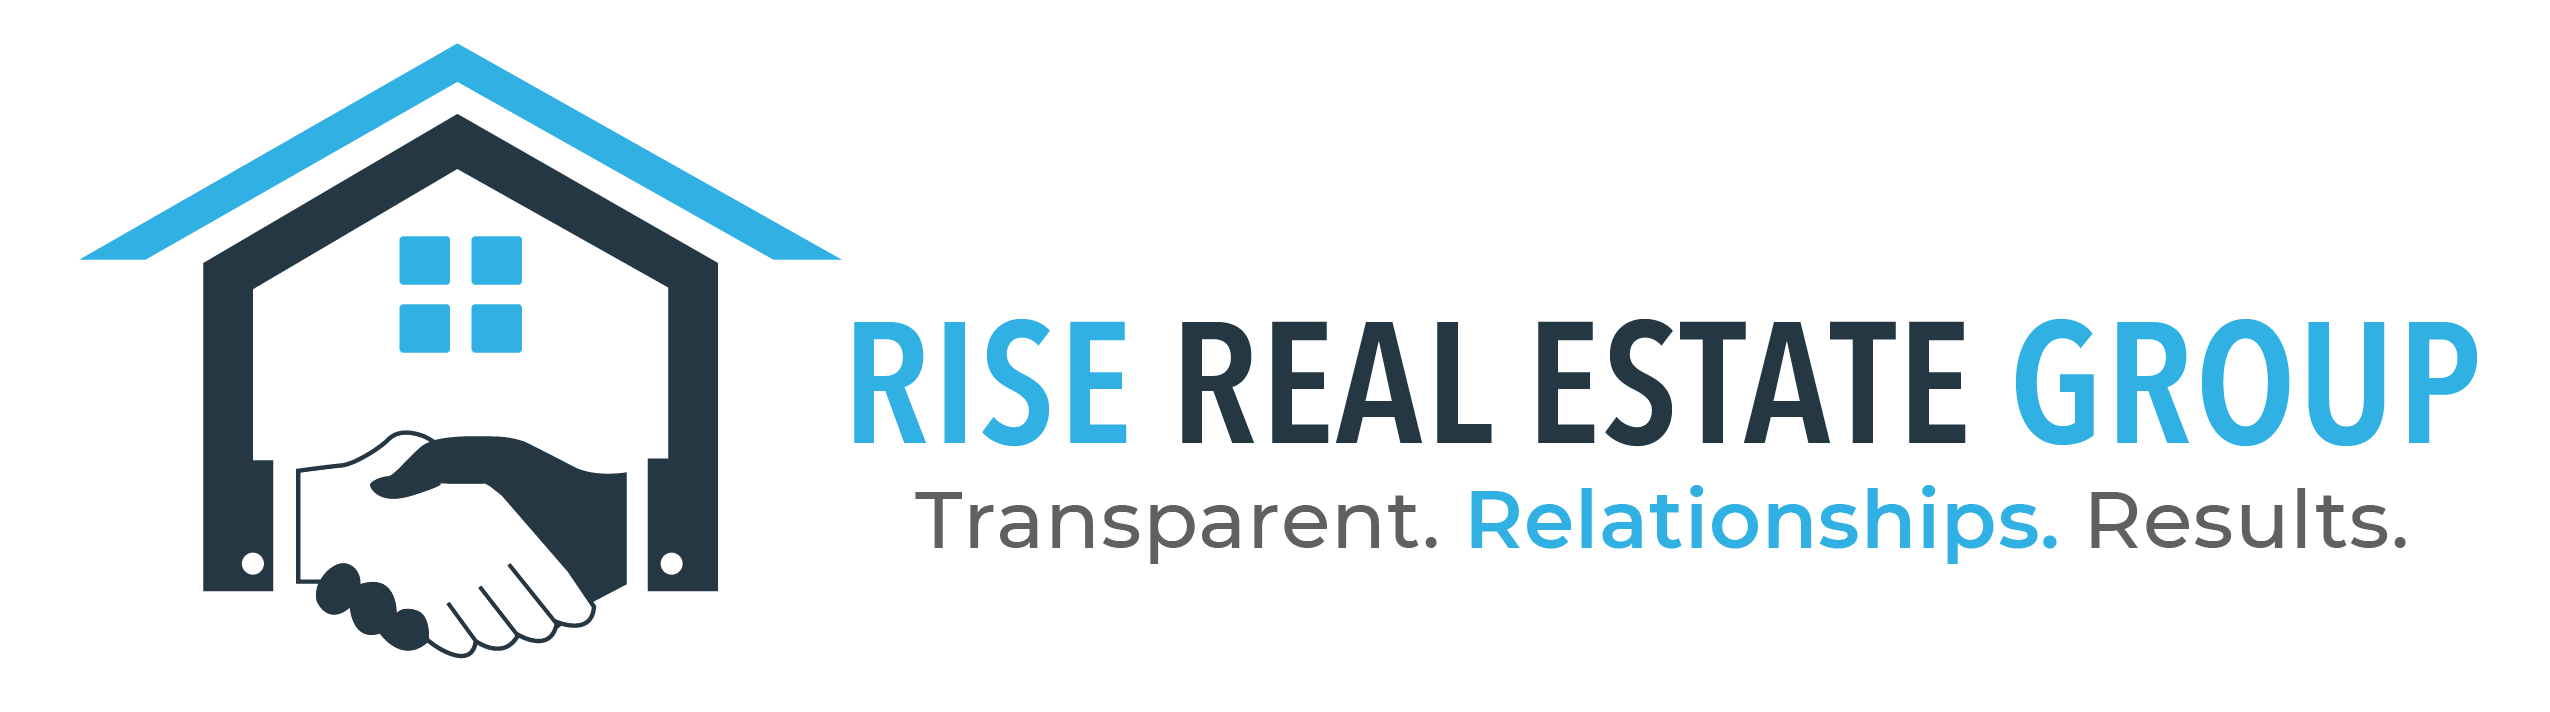 Rise Real Estate Group logo